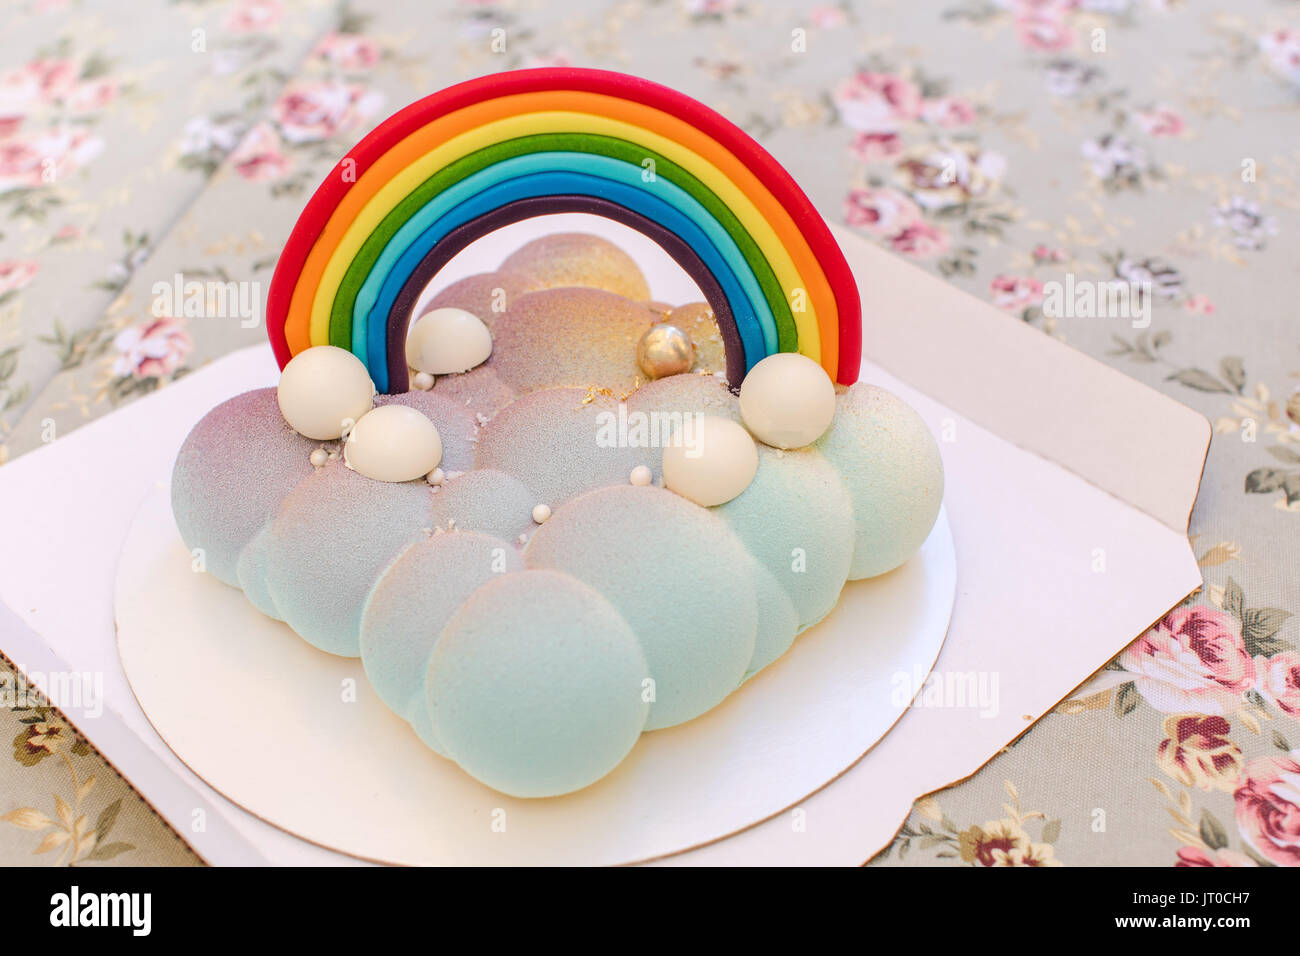 Cake with beautiful creative decor Stock Photo